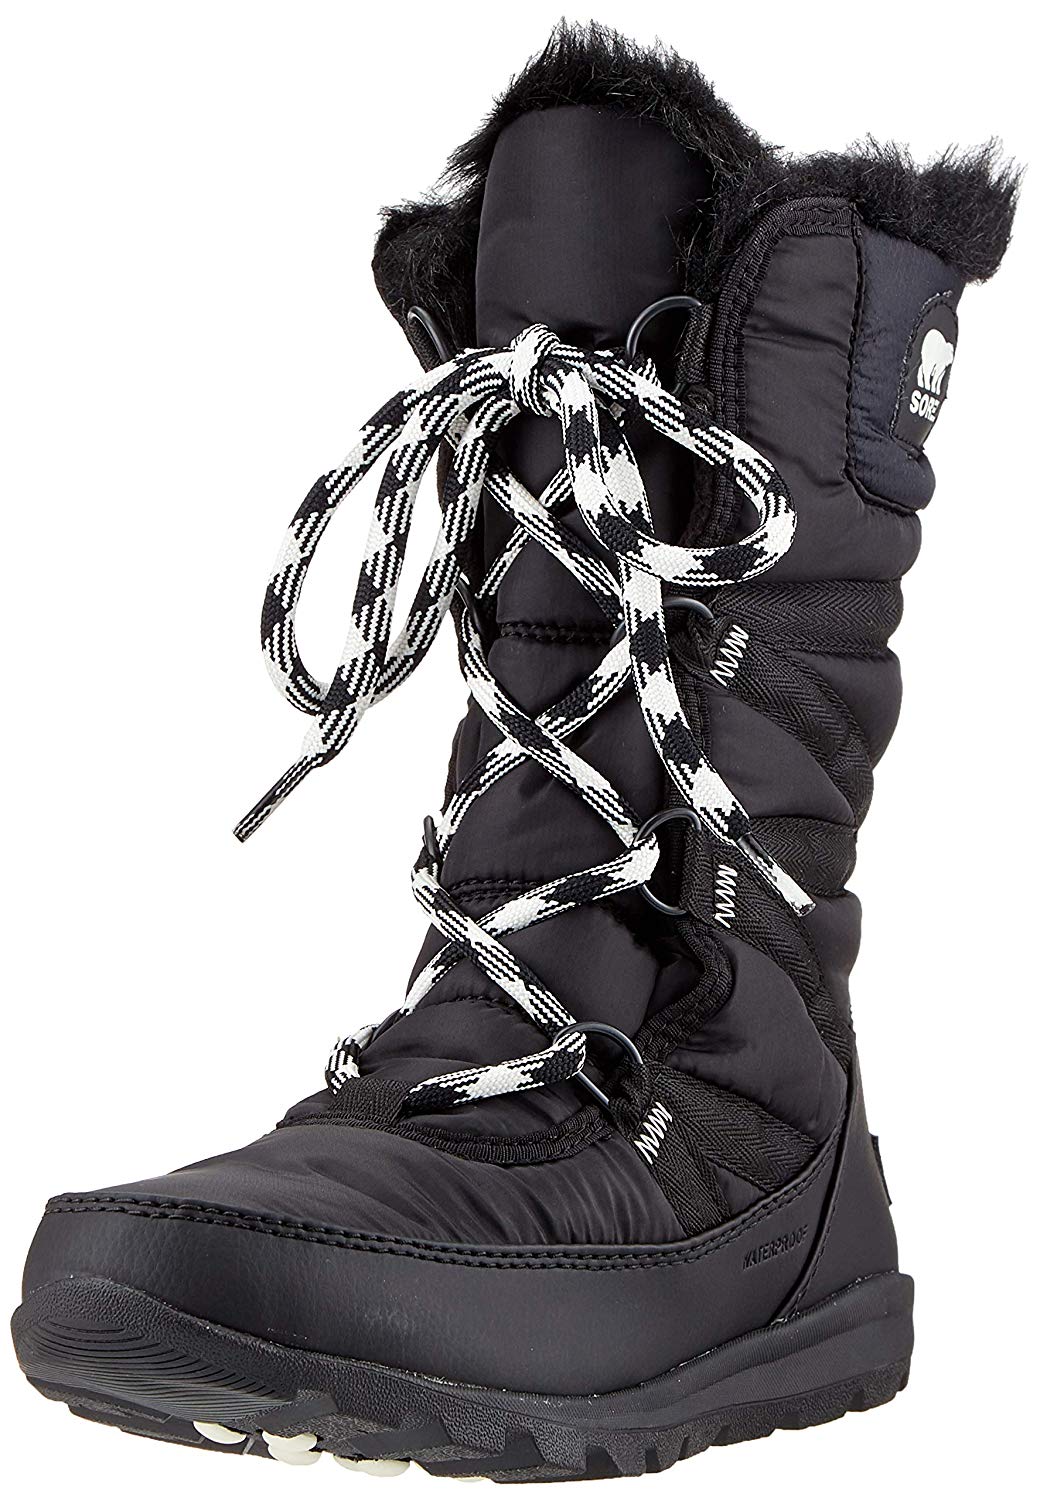 Sorel Women's Whitney Short Snow Boot, Black, Size 5.0 RsQV | eBay